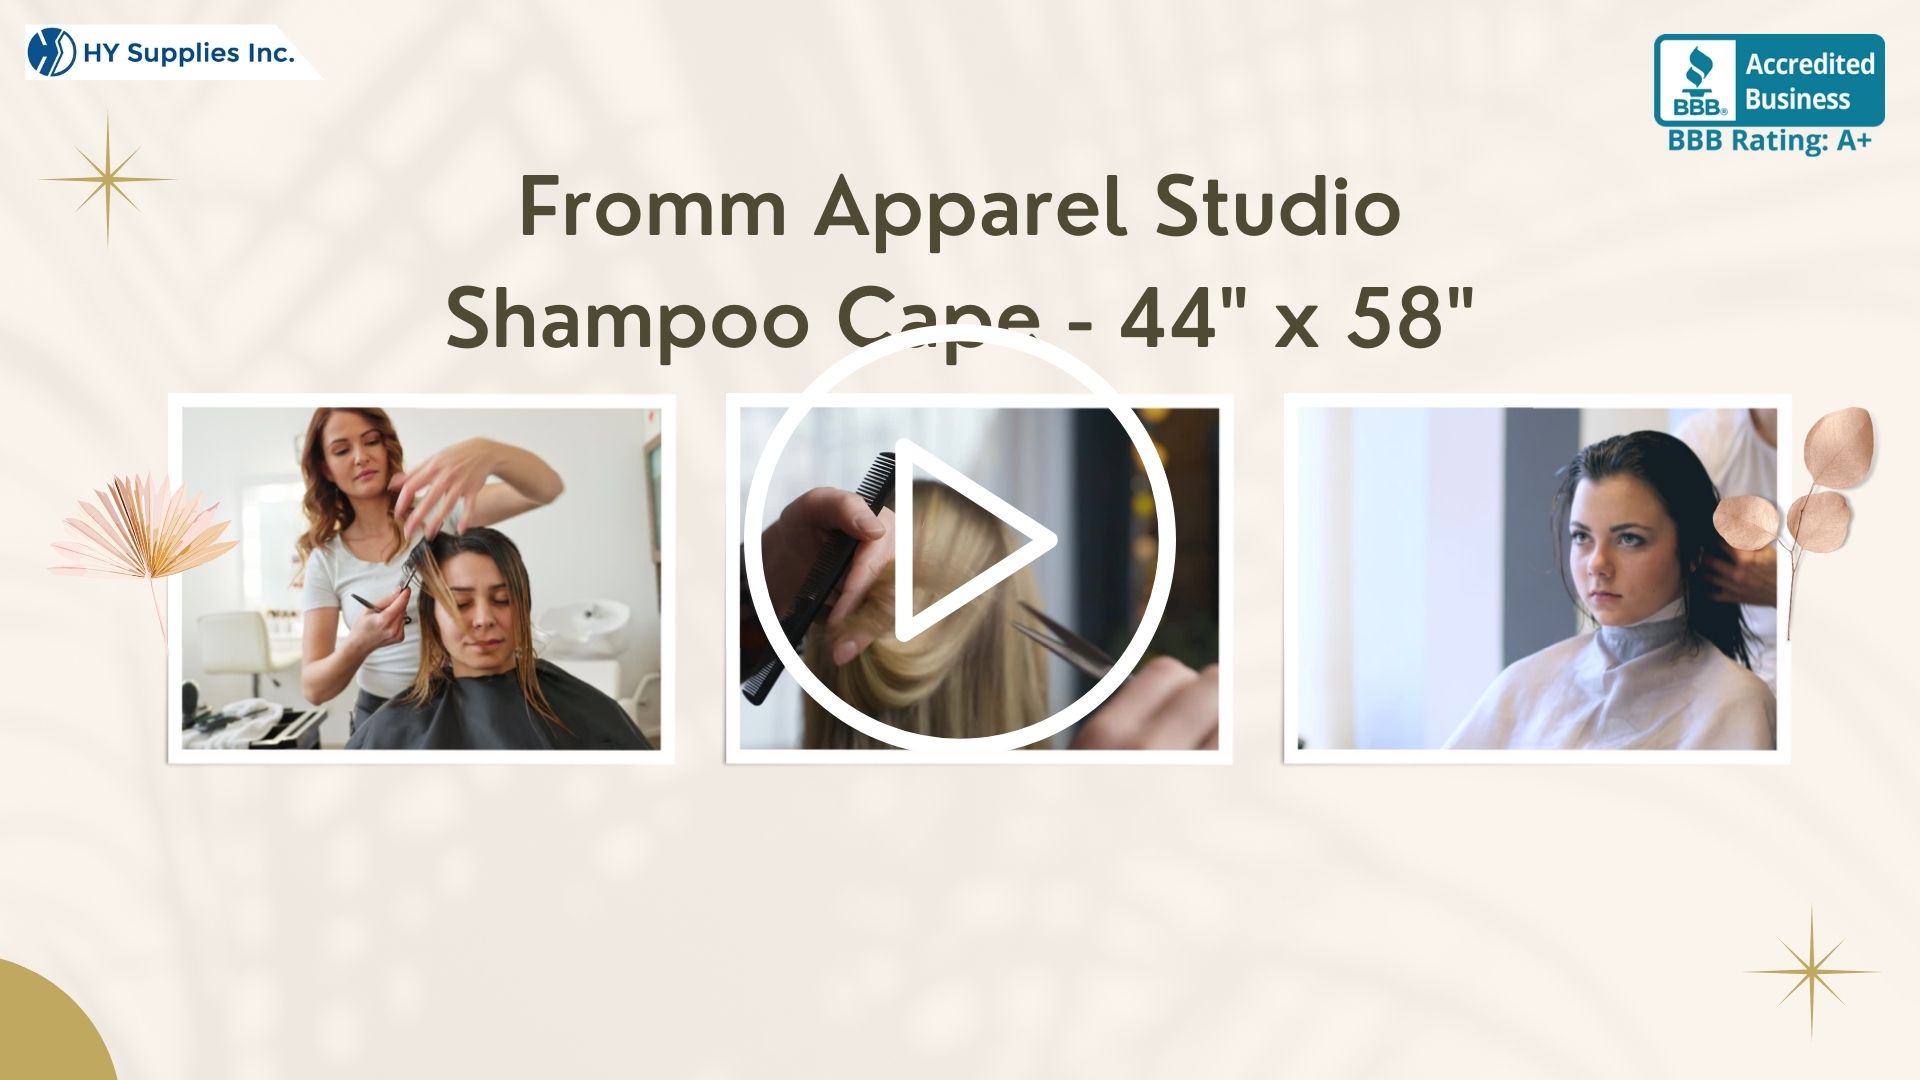 Fromm Apparel Studio Shampoo Cape - 44" x 58"